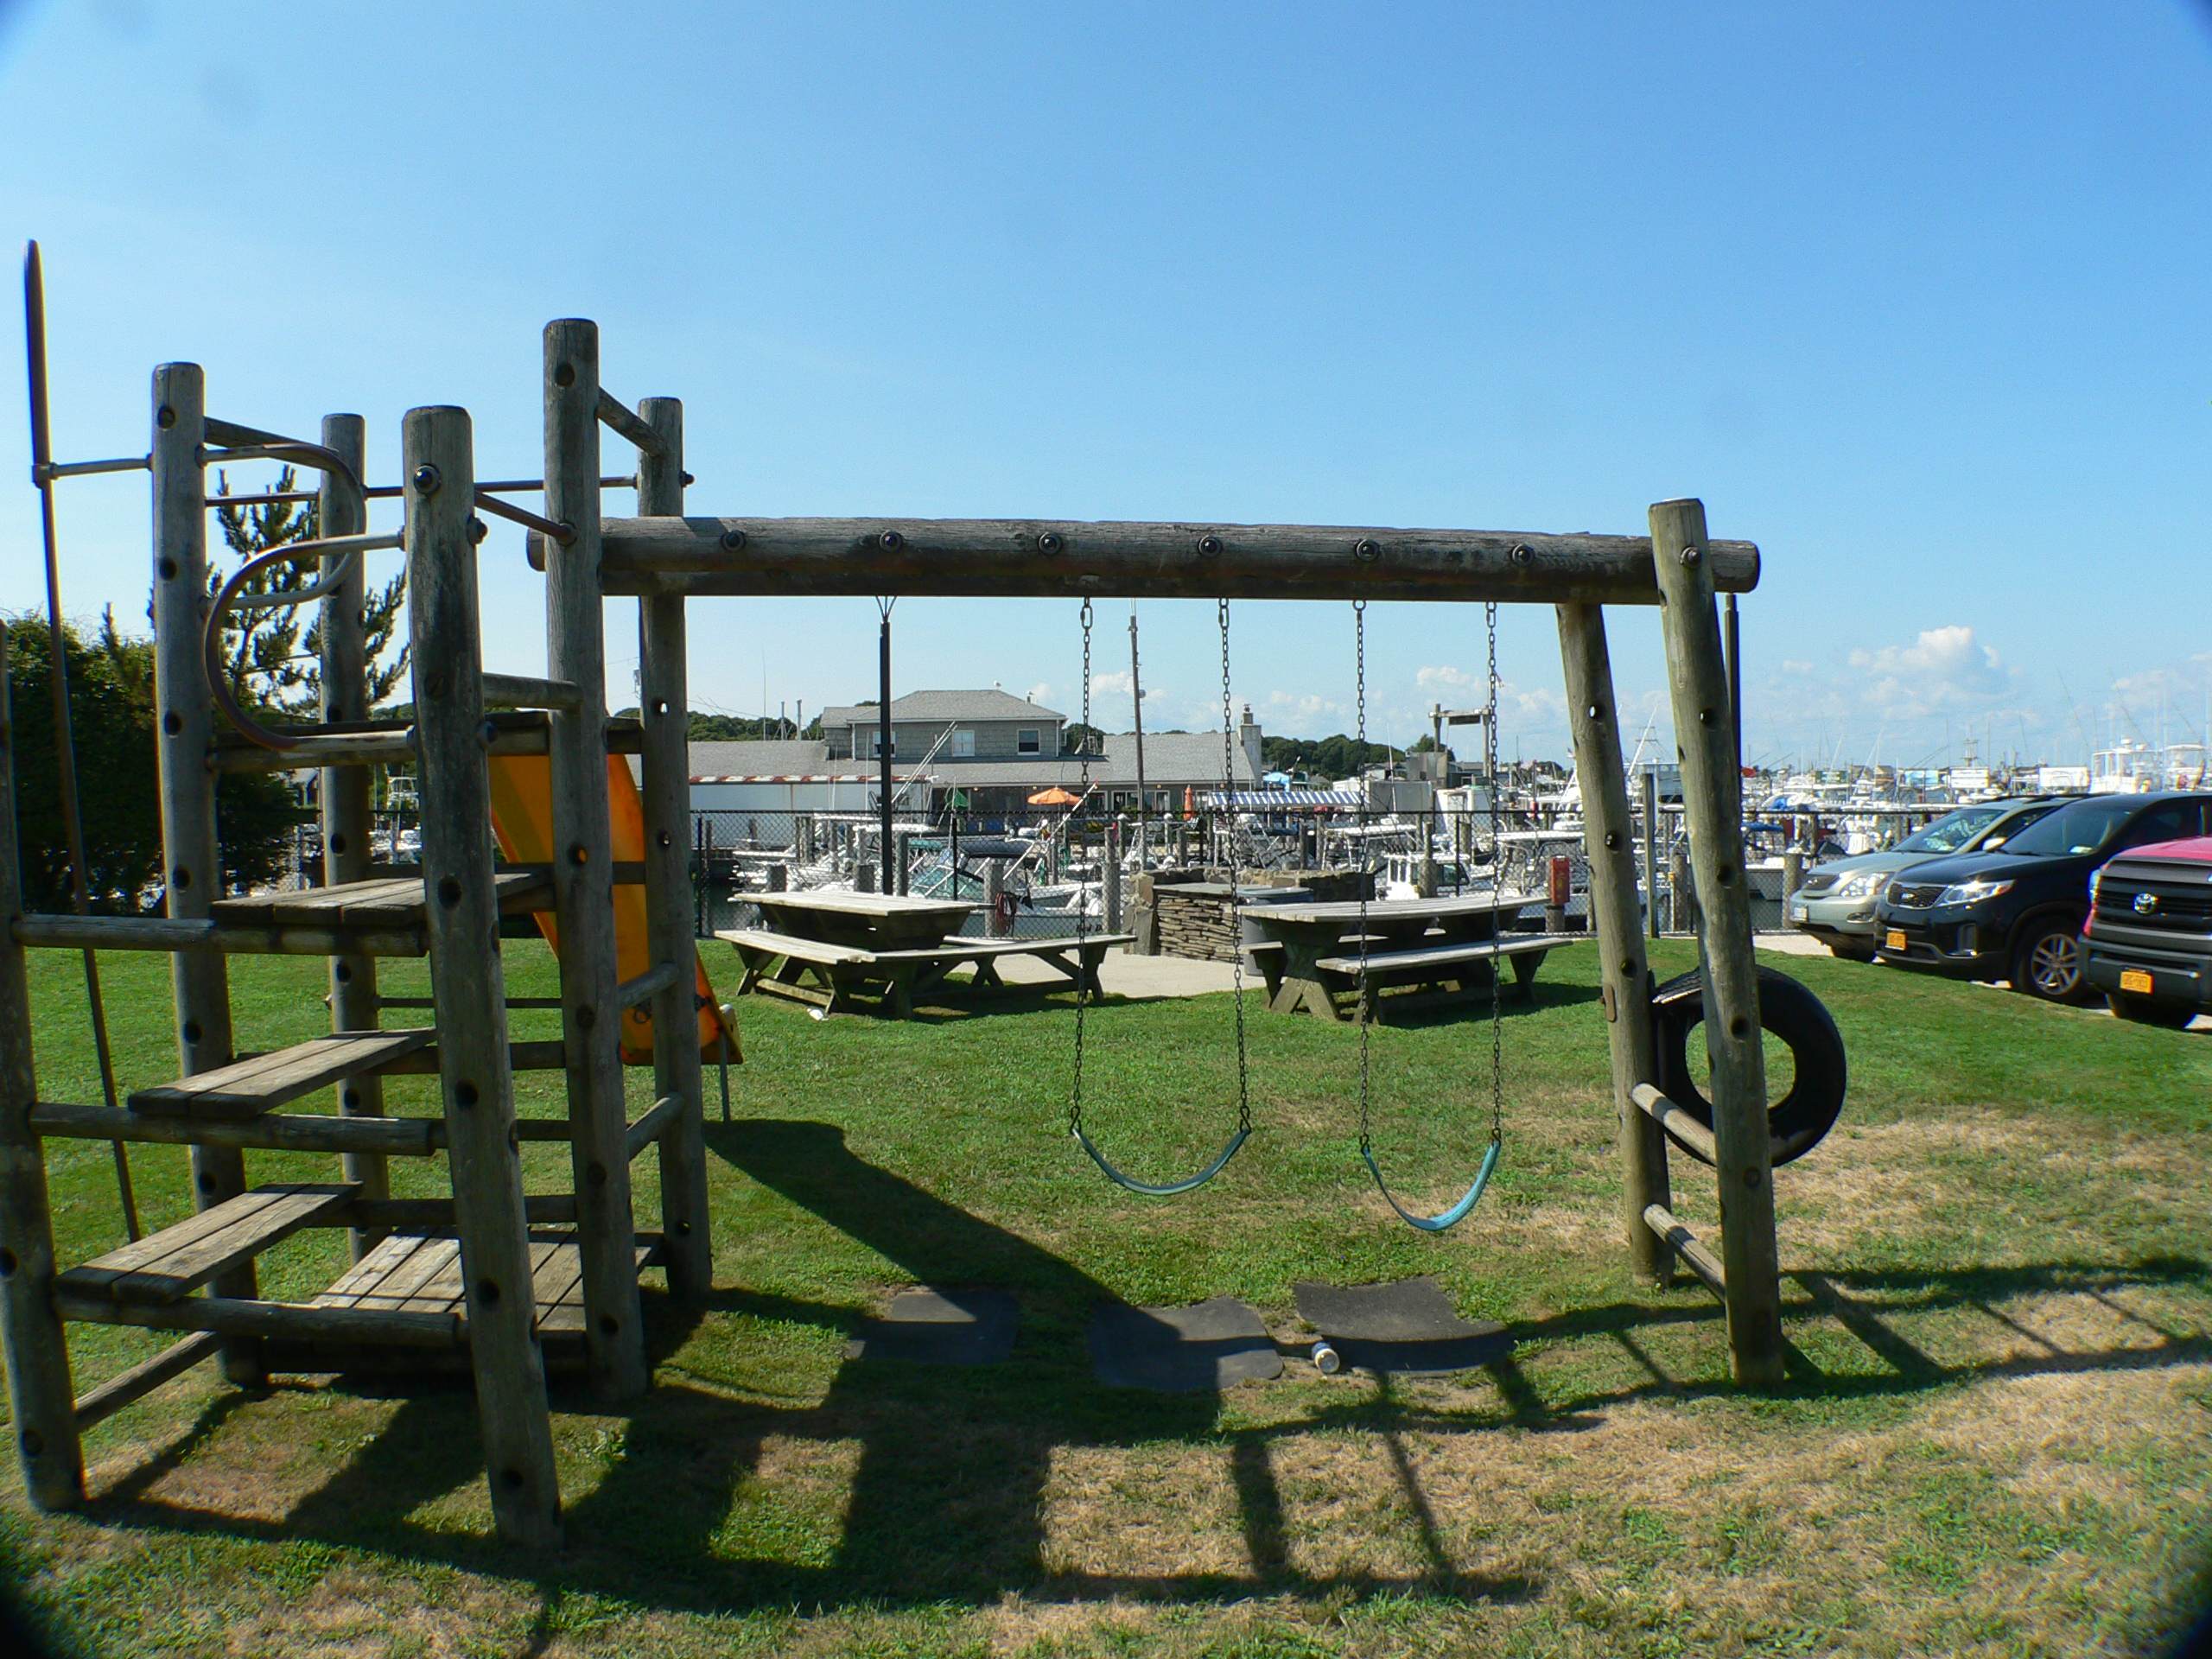 Snug Harbor Marina has a children's playground